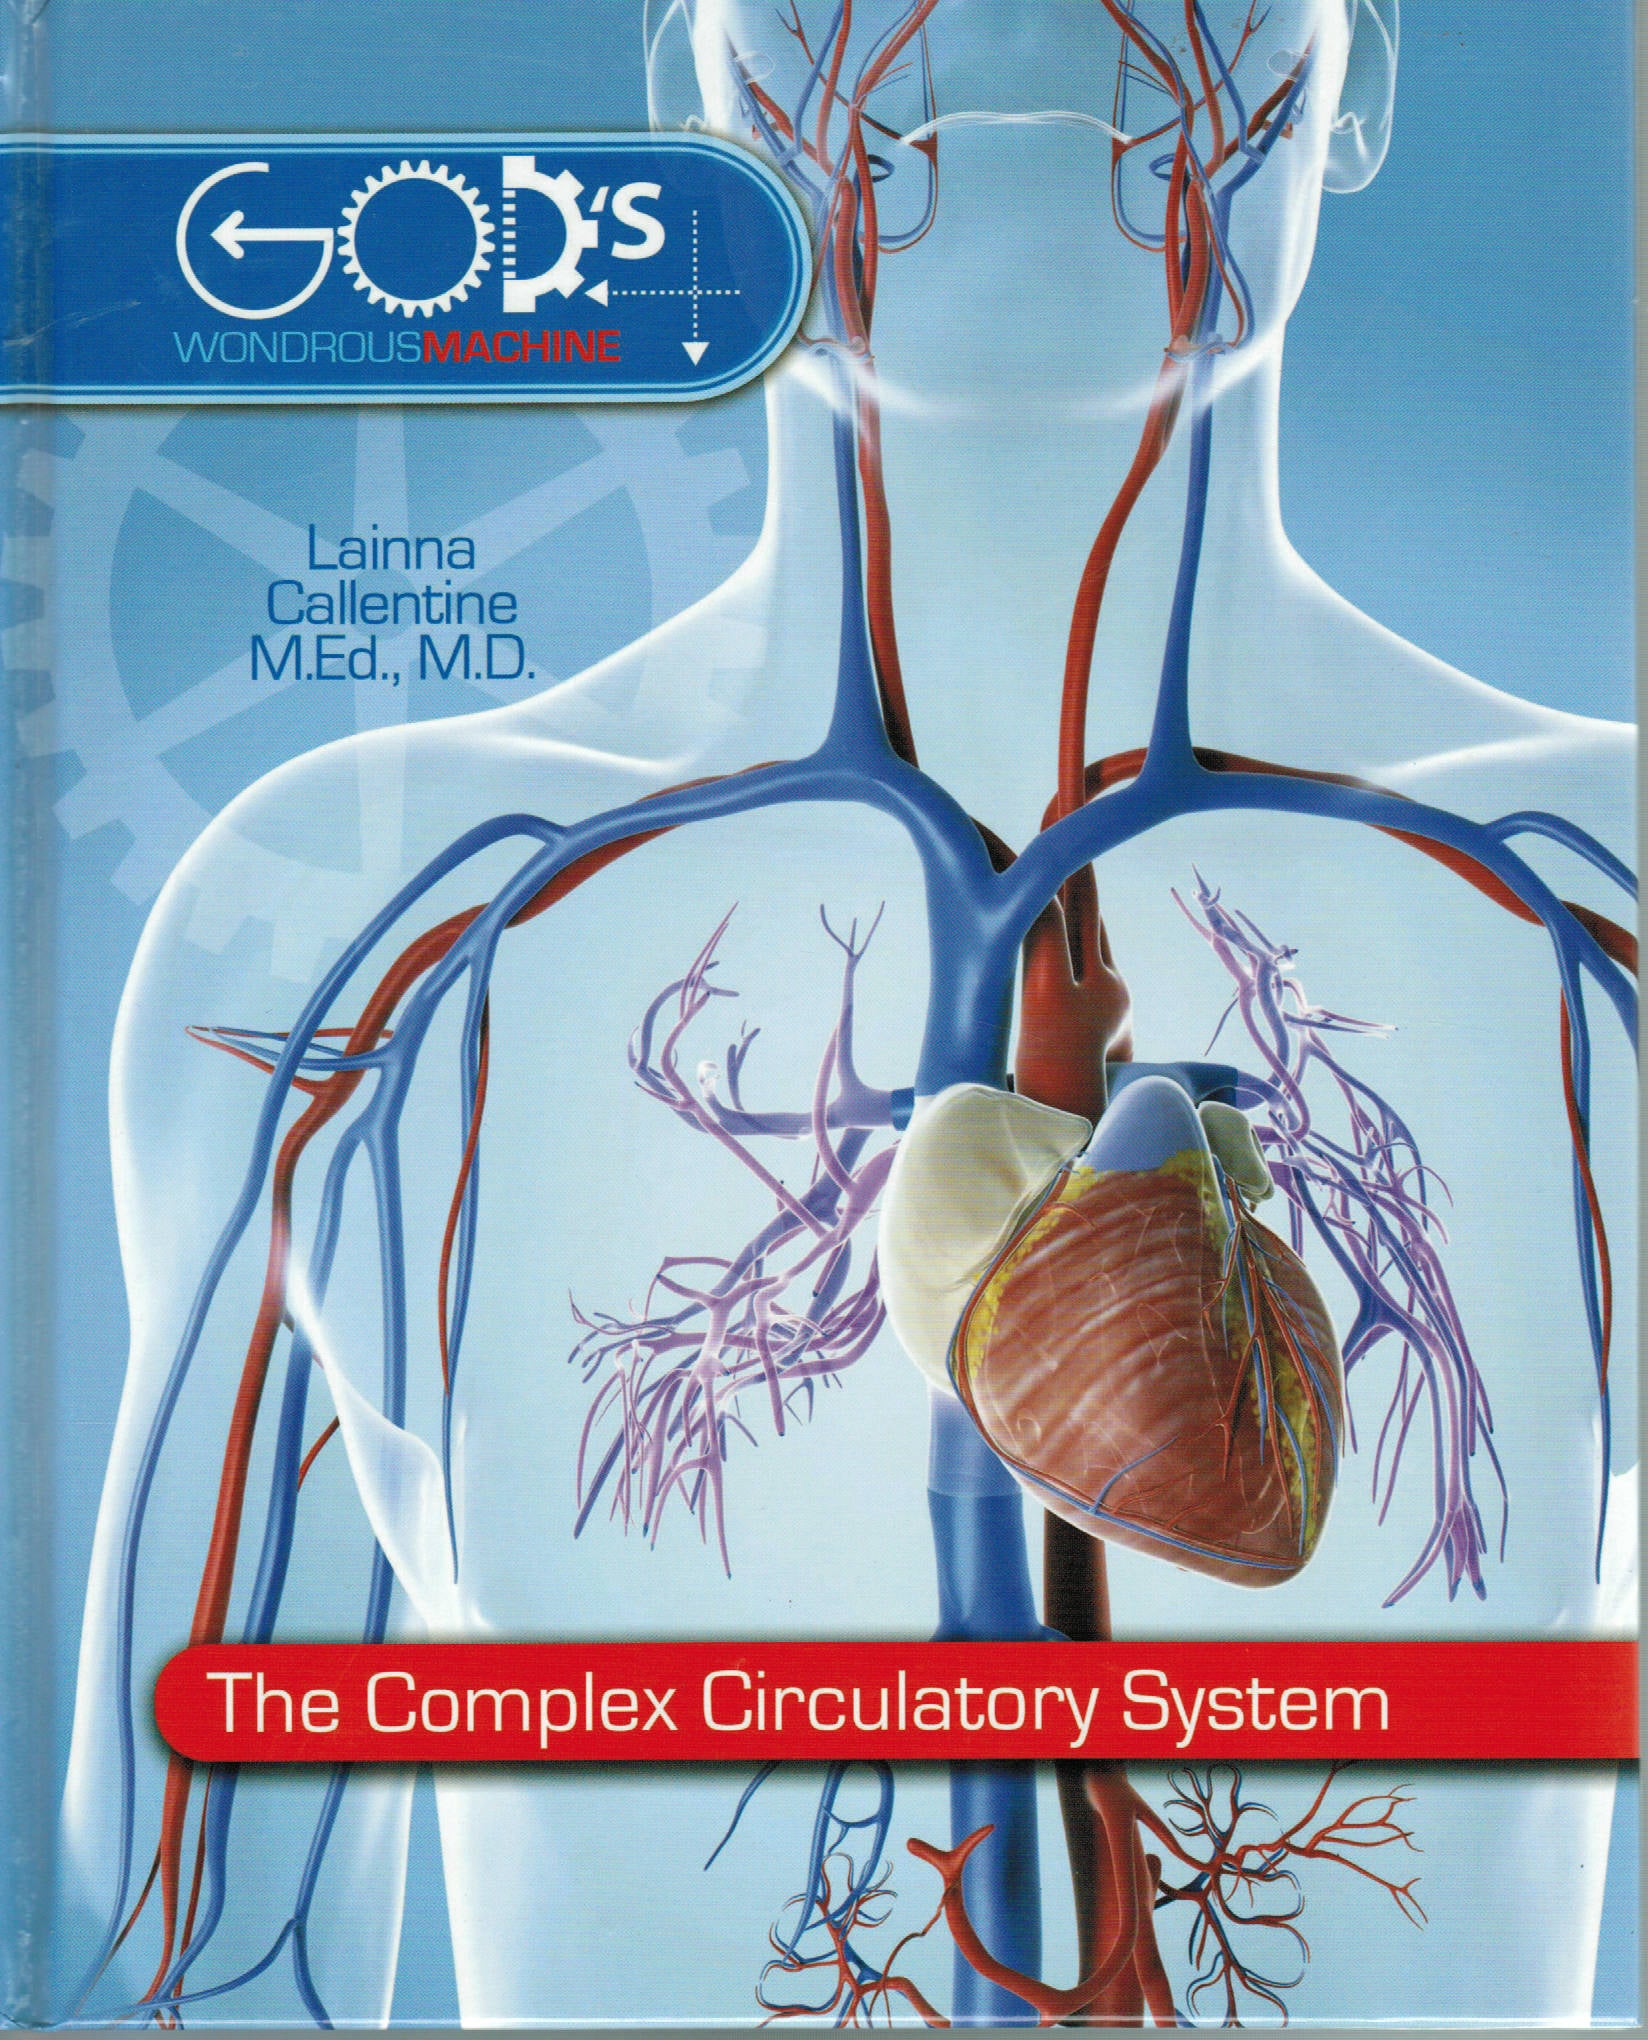 God's Wondrous Machine Series - The Complex Circulatory System